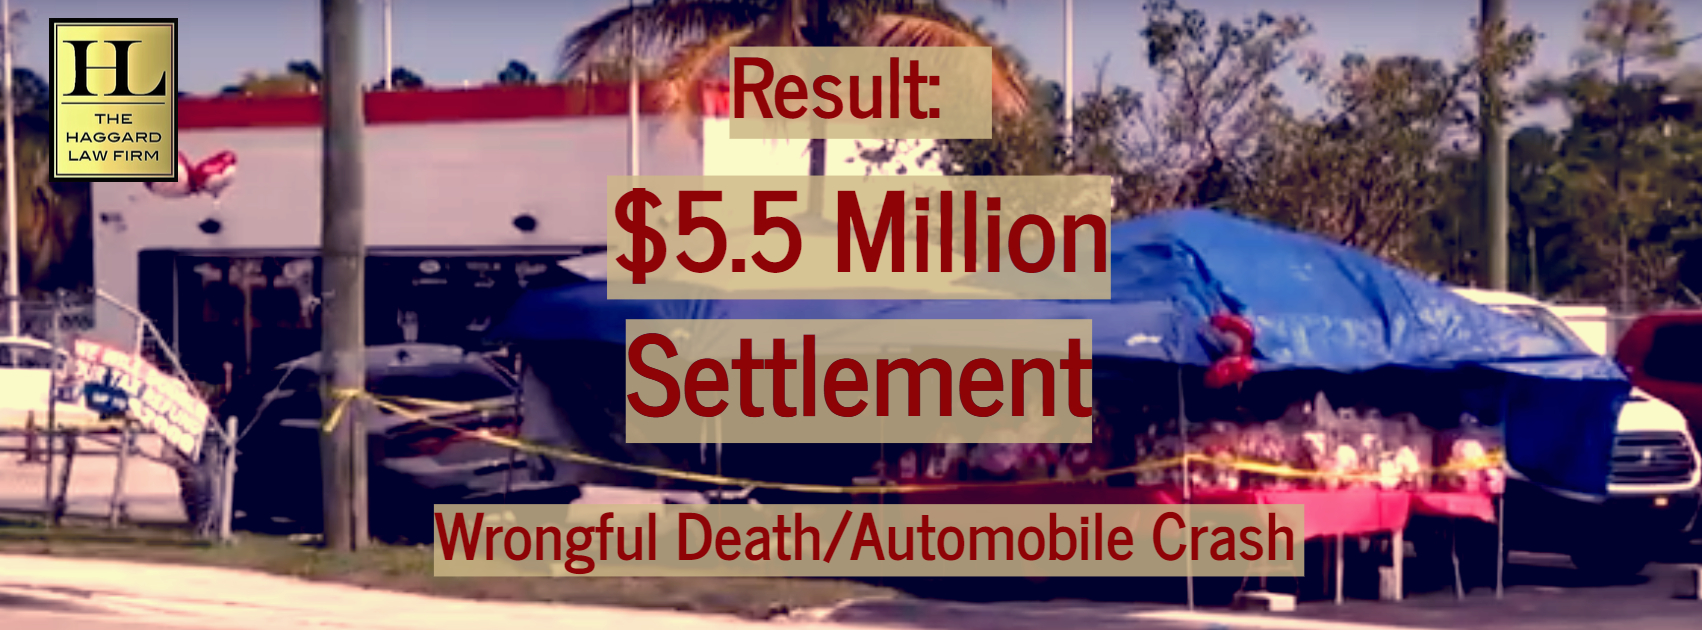 $5.5 Million Settlement in Wrongful Death/Automobile Crash Case